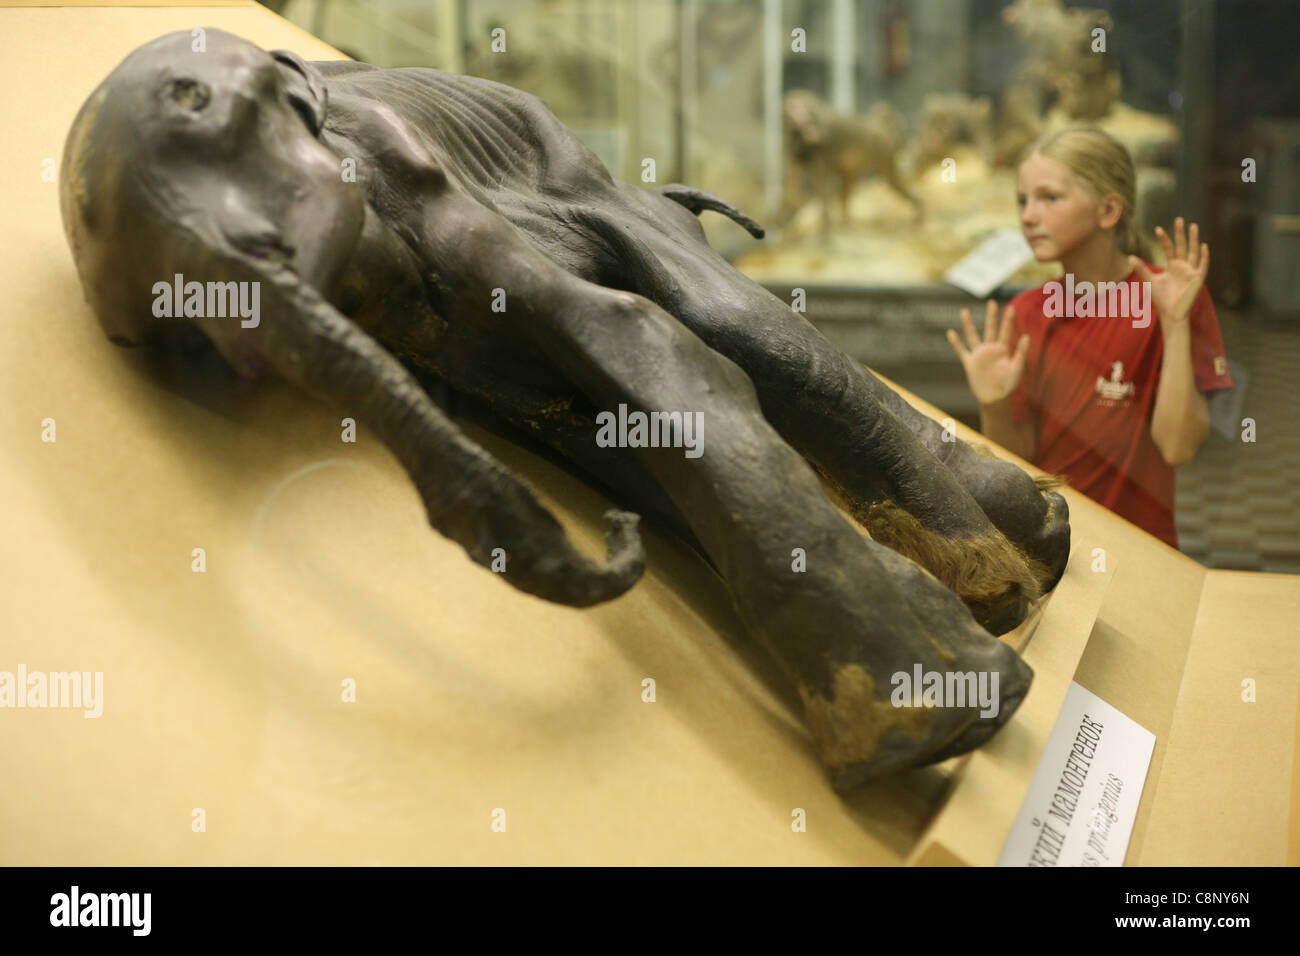 Mumie des berühmten Baby Mammut Dima im Zoologischen Museum in Sankt Petersburg, Russland. Stockfoto